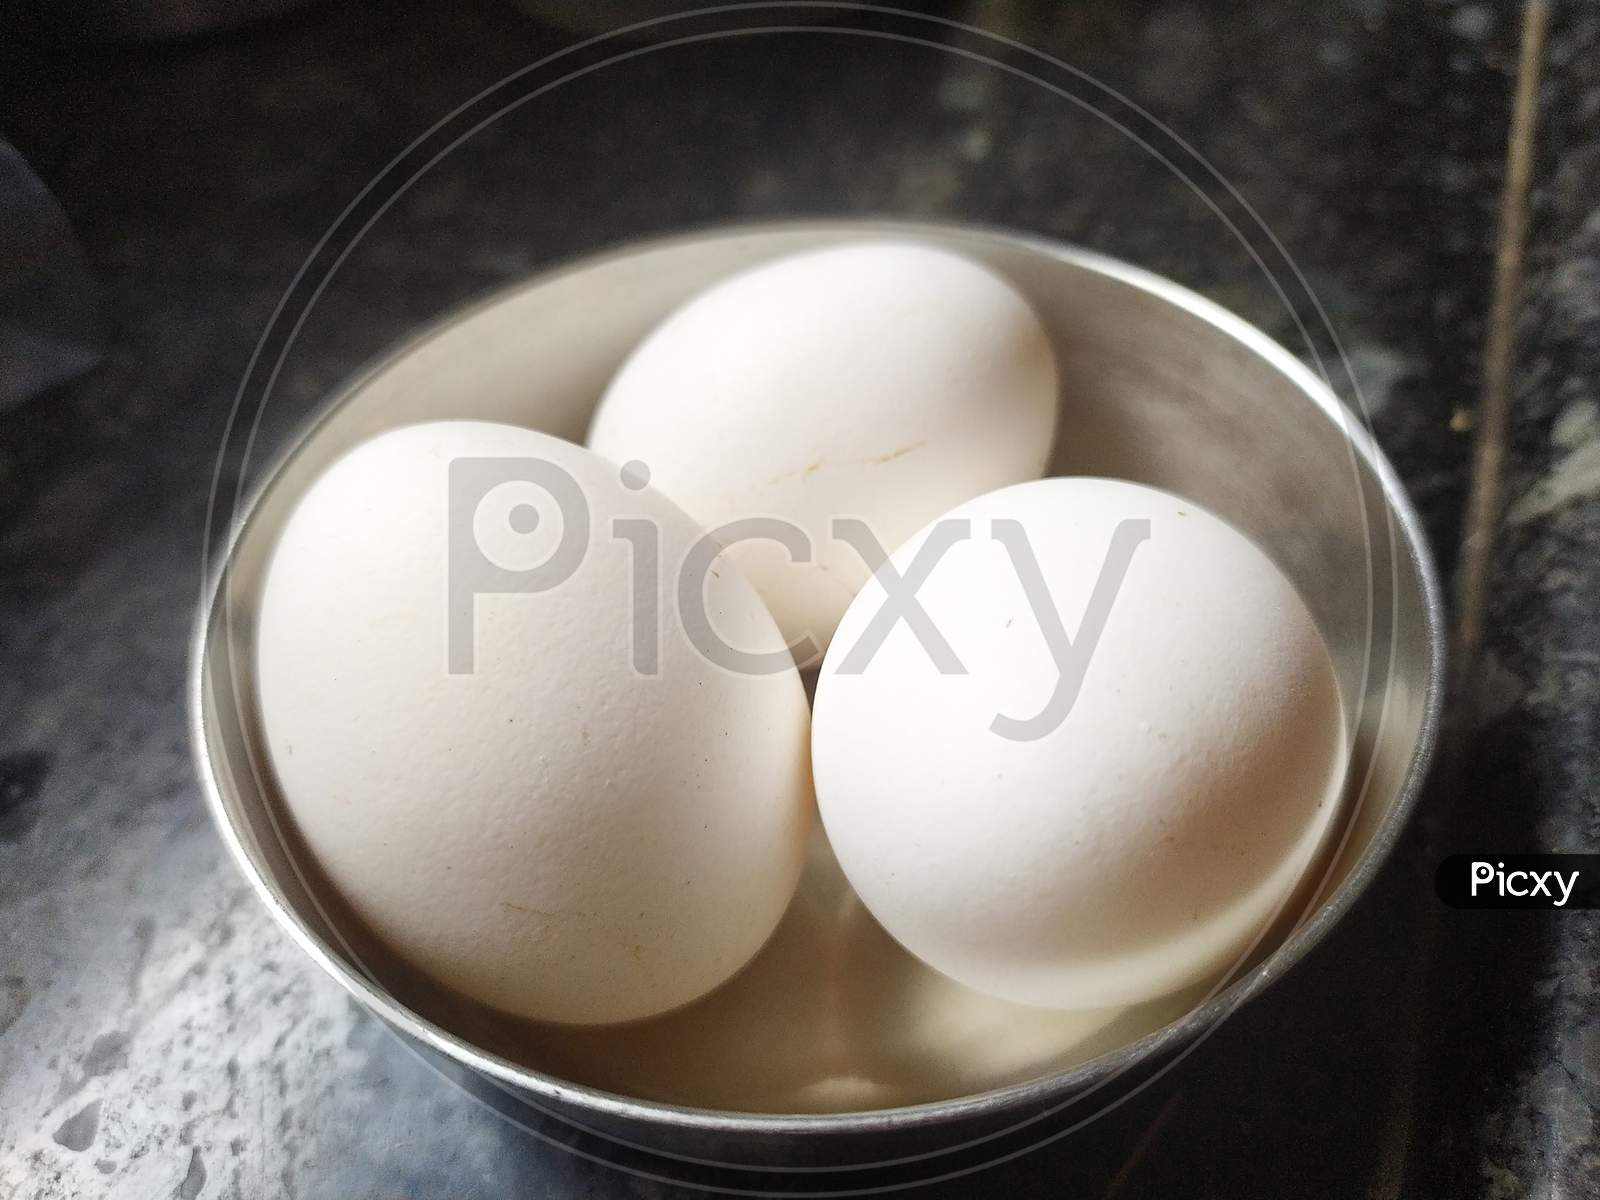 Three chicken eggs in single bowl on tiled floor.